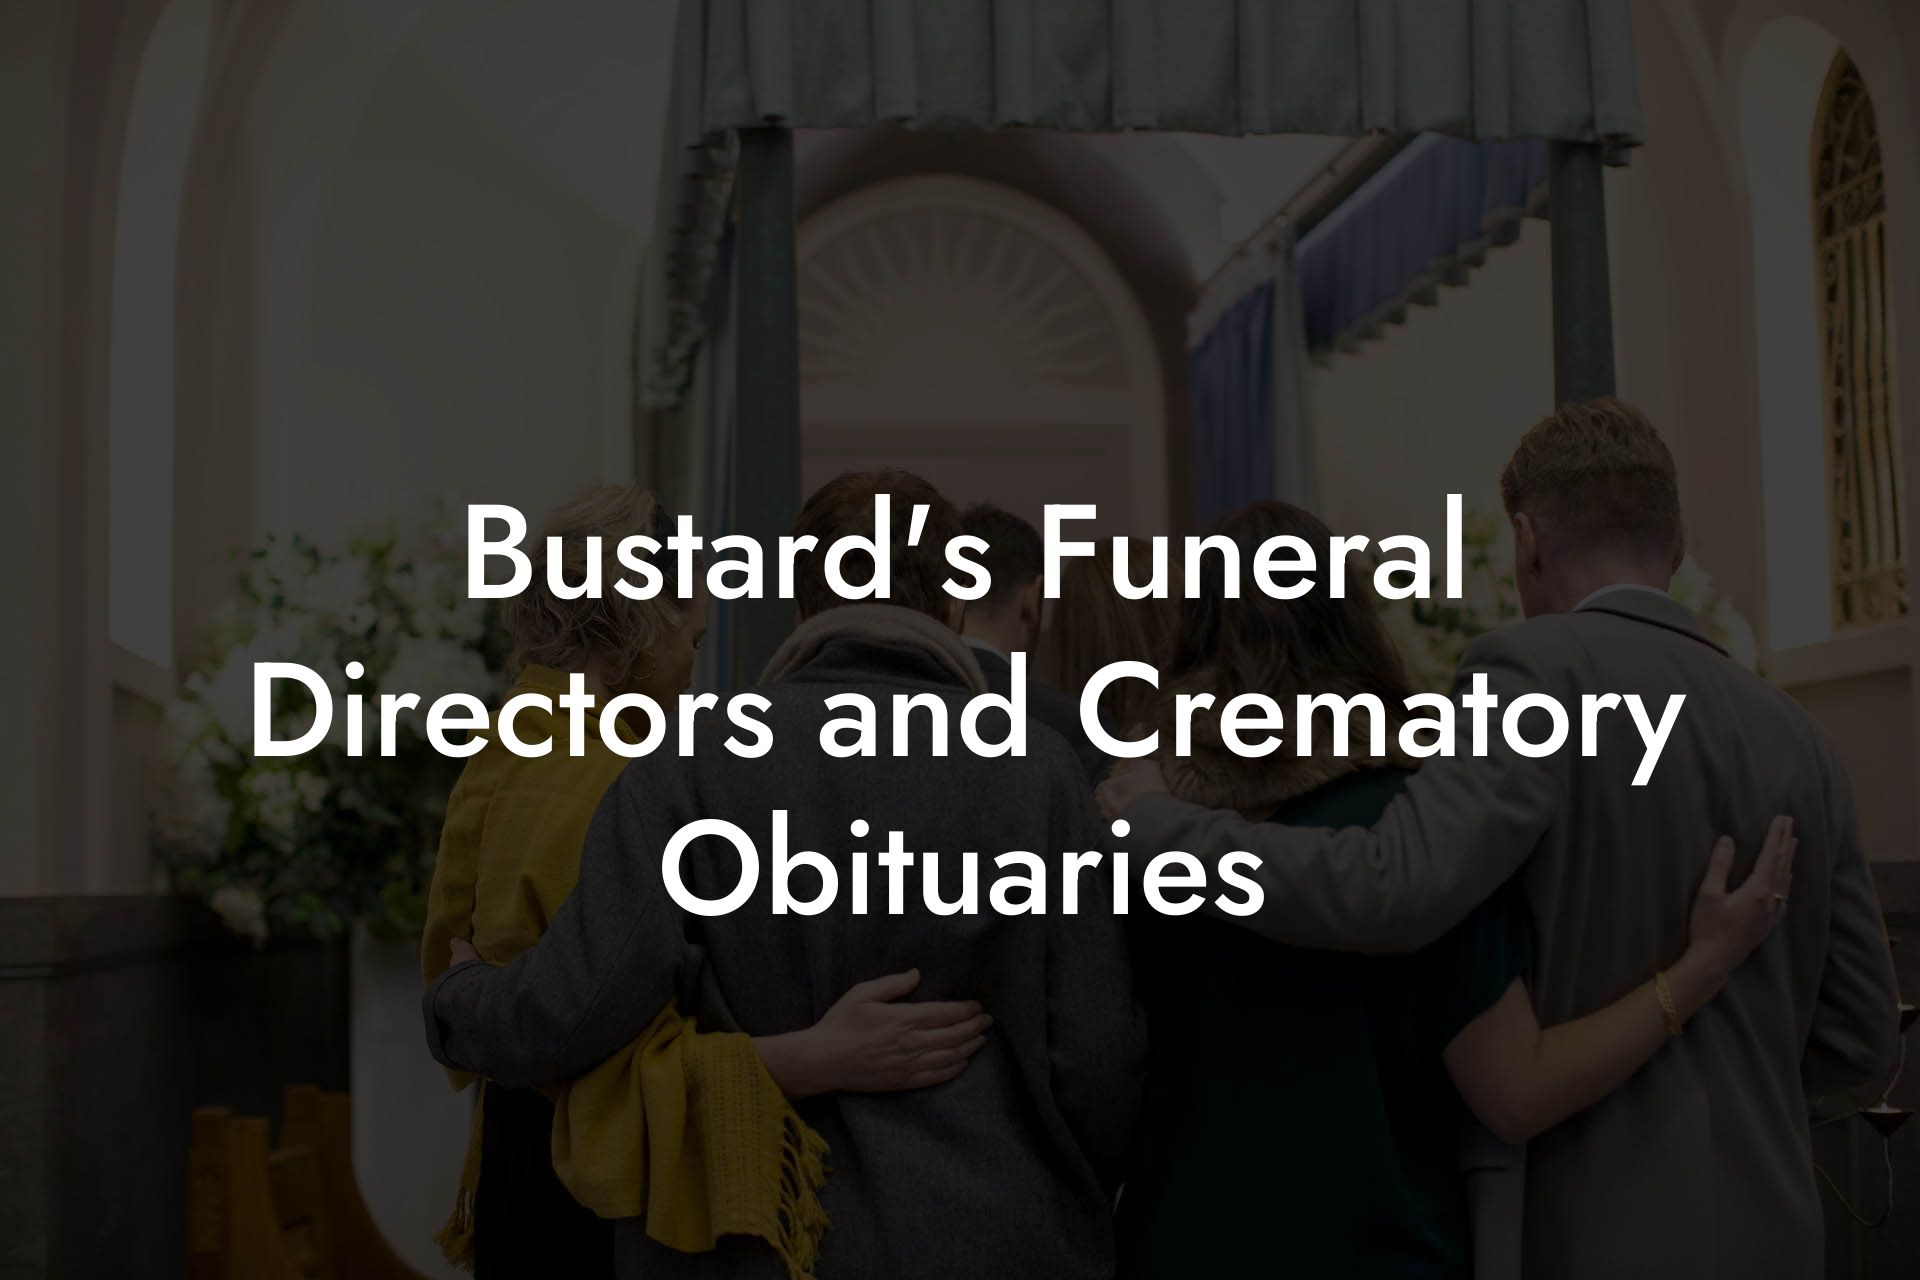 Bustard's Funeral Directors and Crematory Obituaries